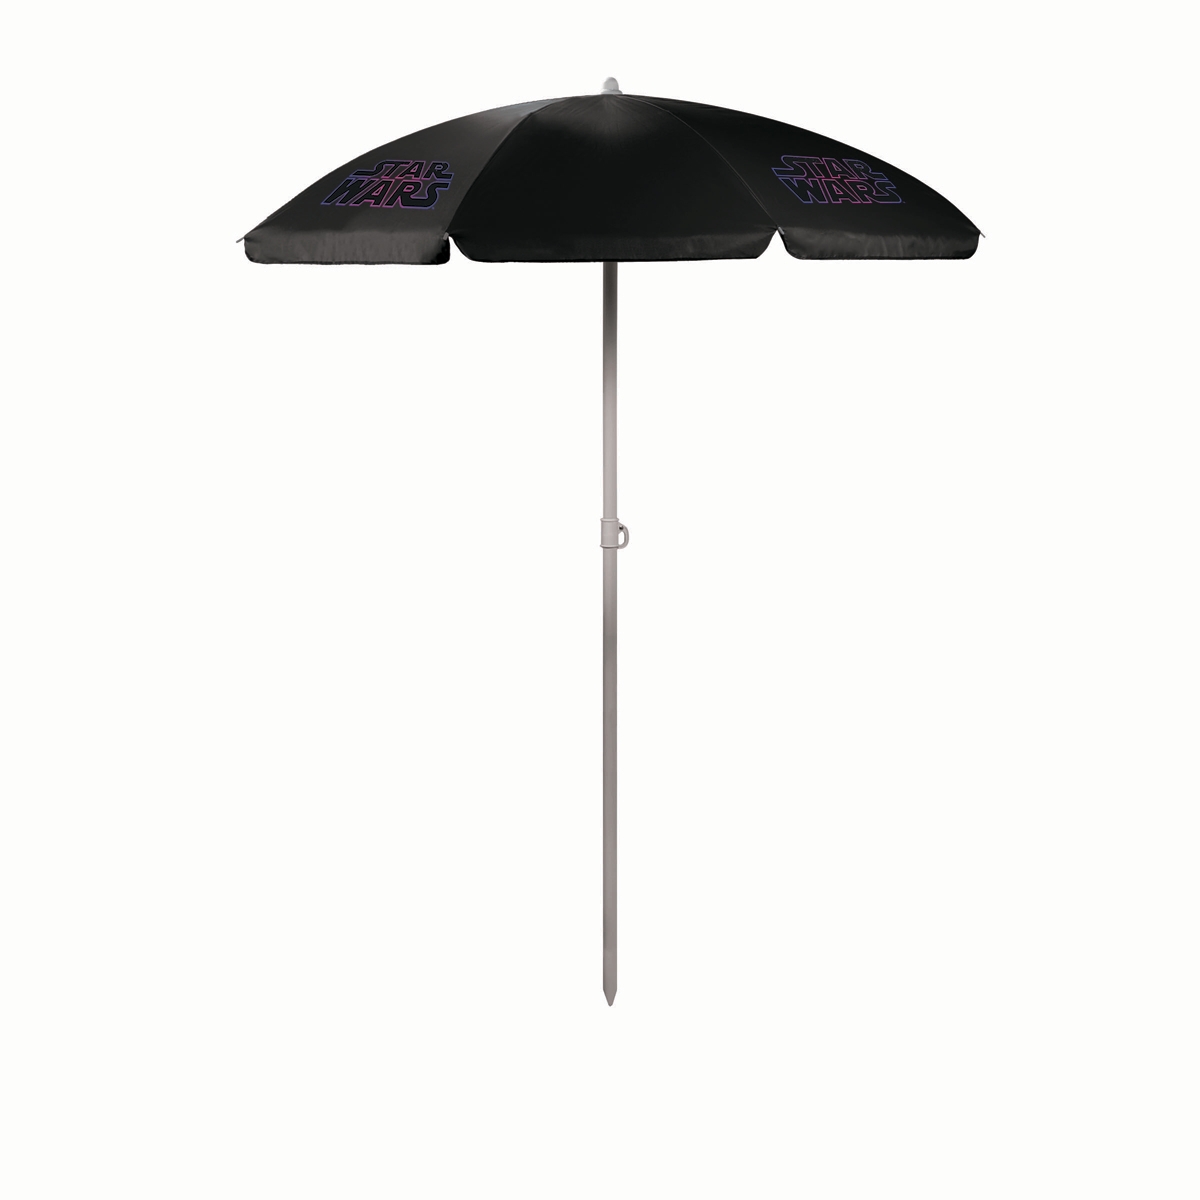 Star Wars Logo Portable Beach Umbrella - Black